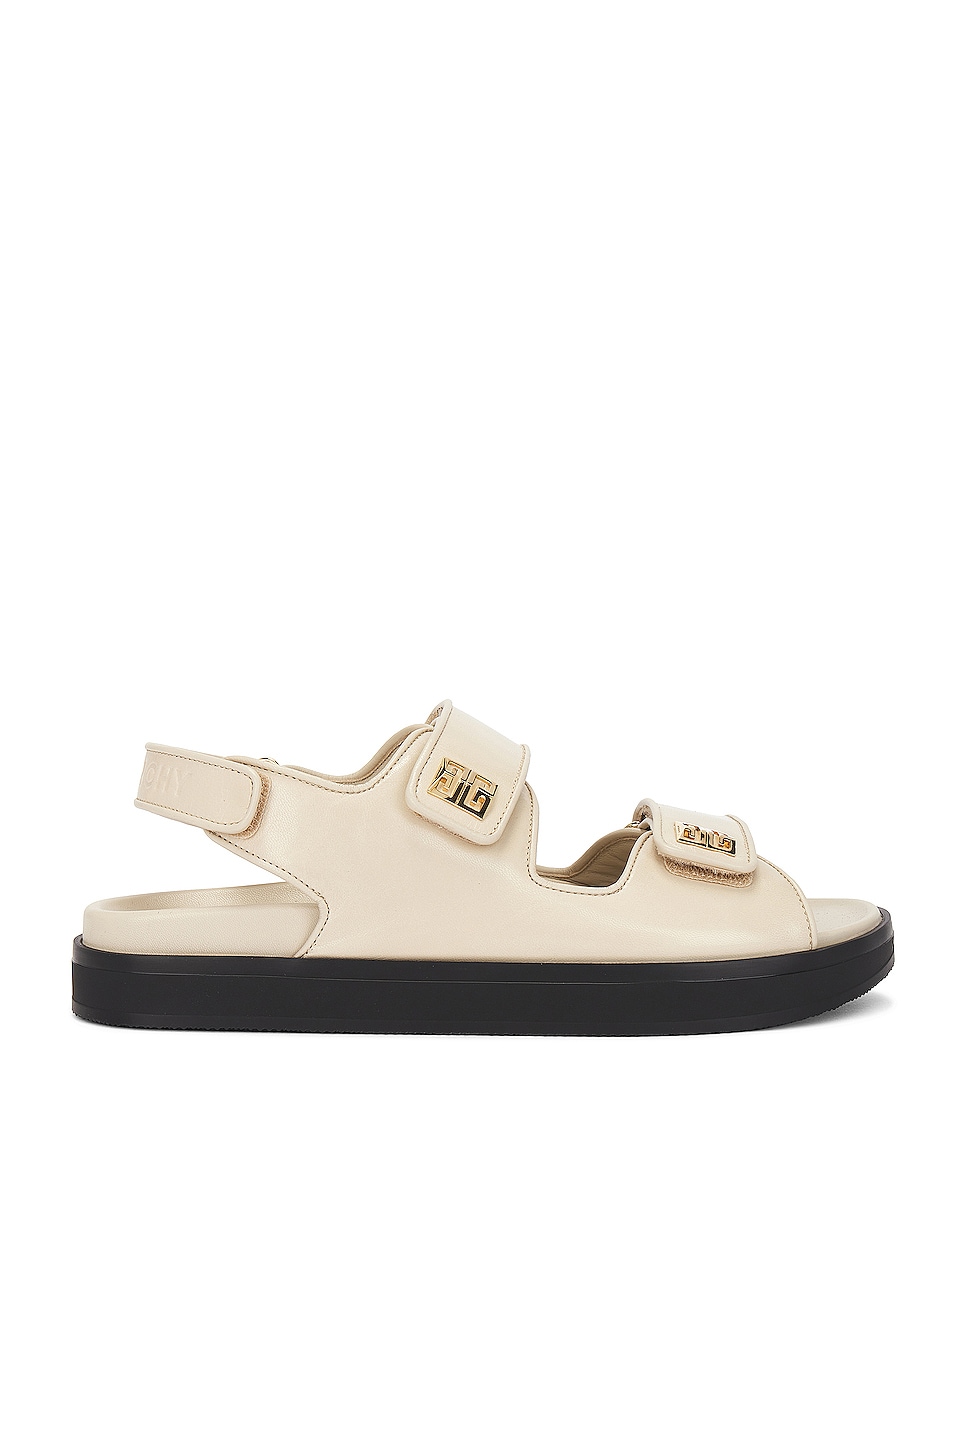 Image 1 of Givenchy 4G Strap Flat Sandal in Natural Beige